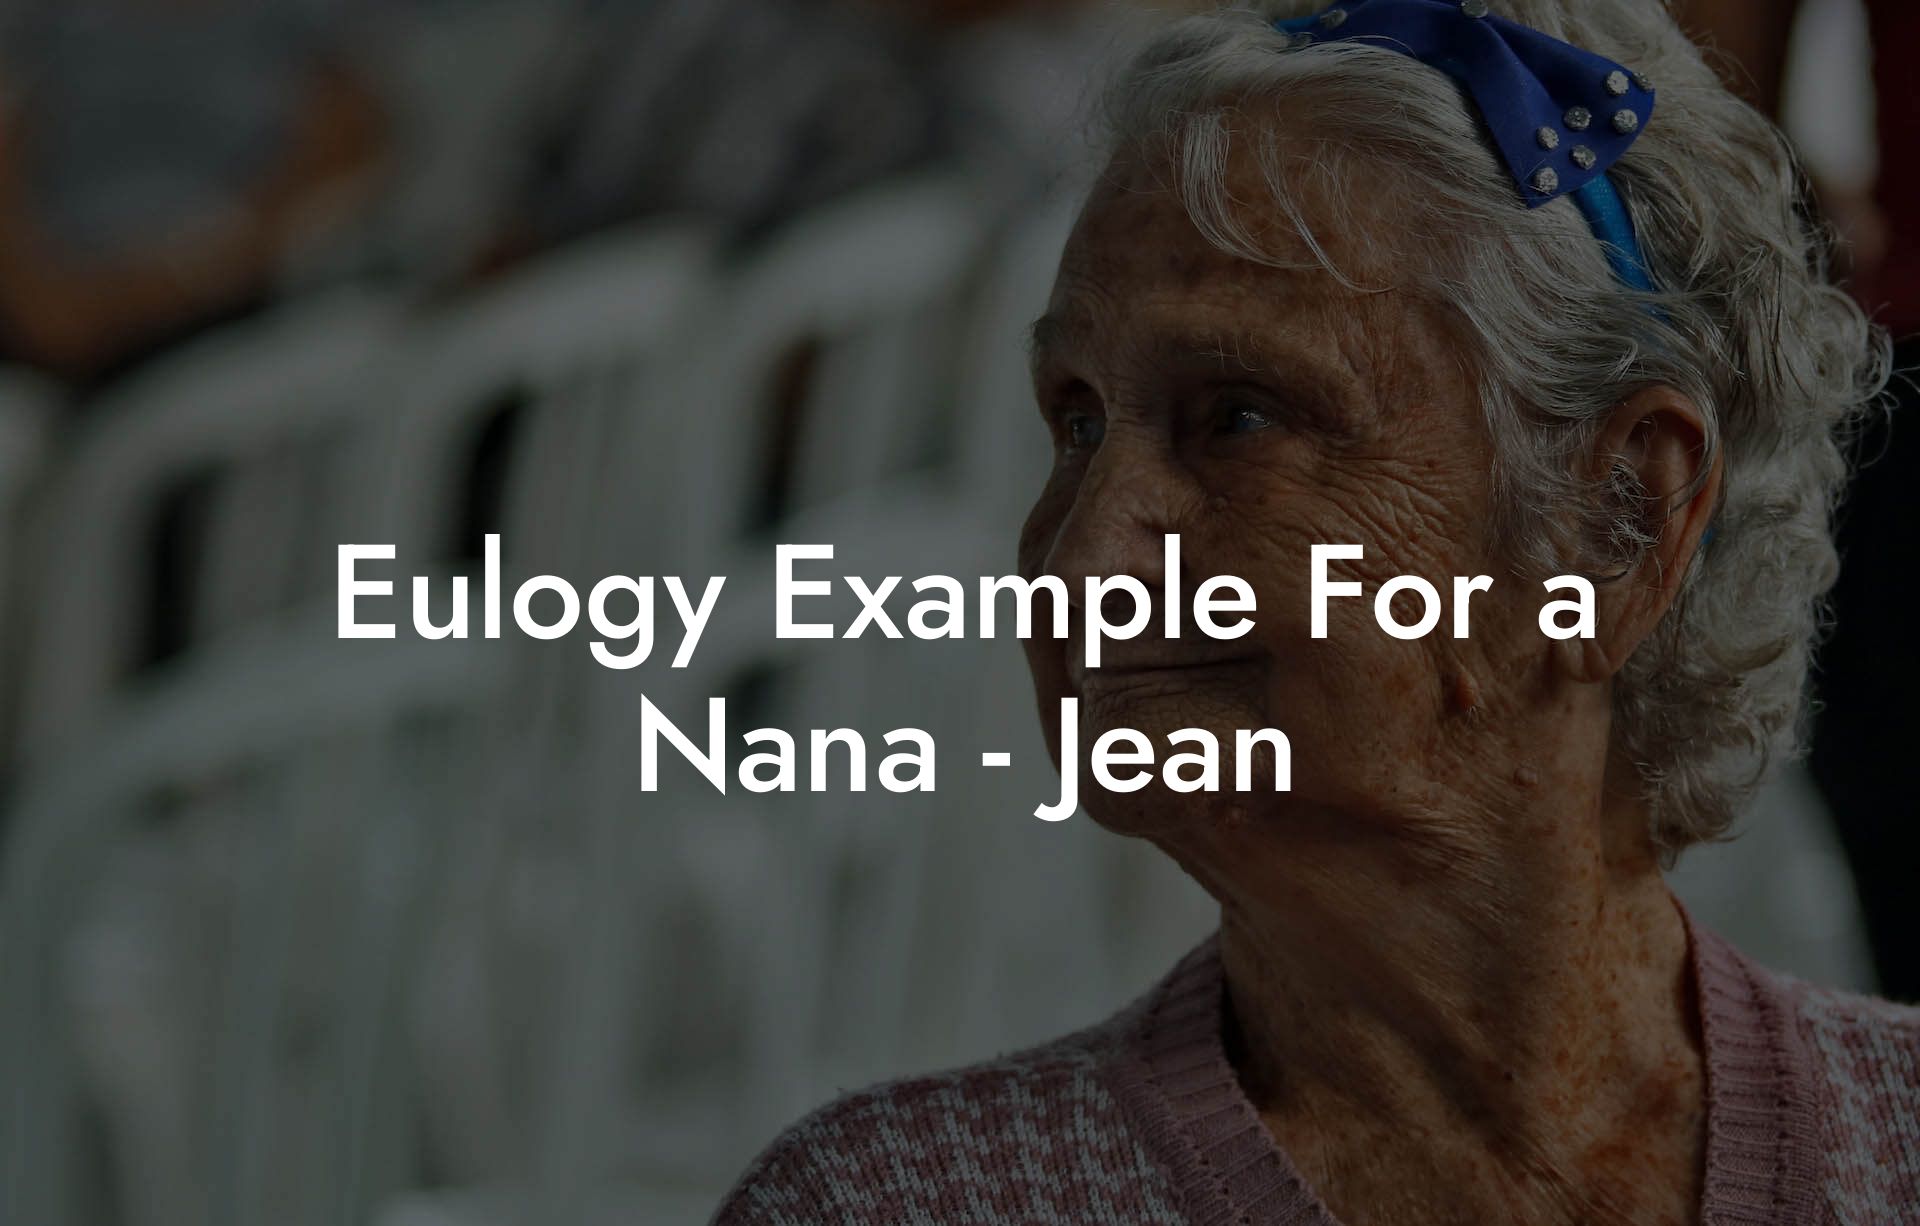 Eulogy Example For a Nana - Jean